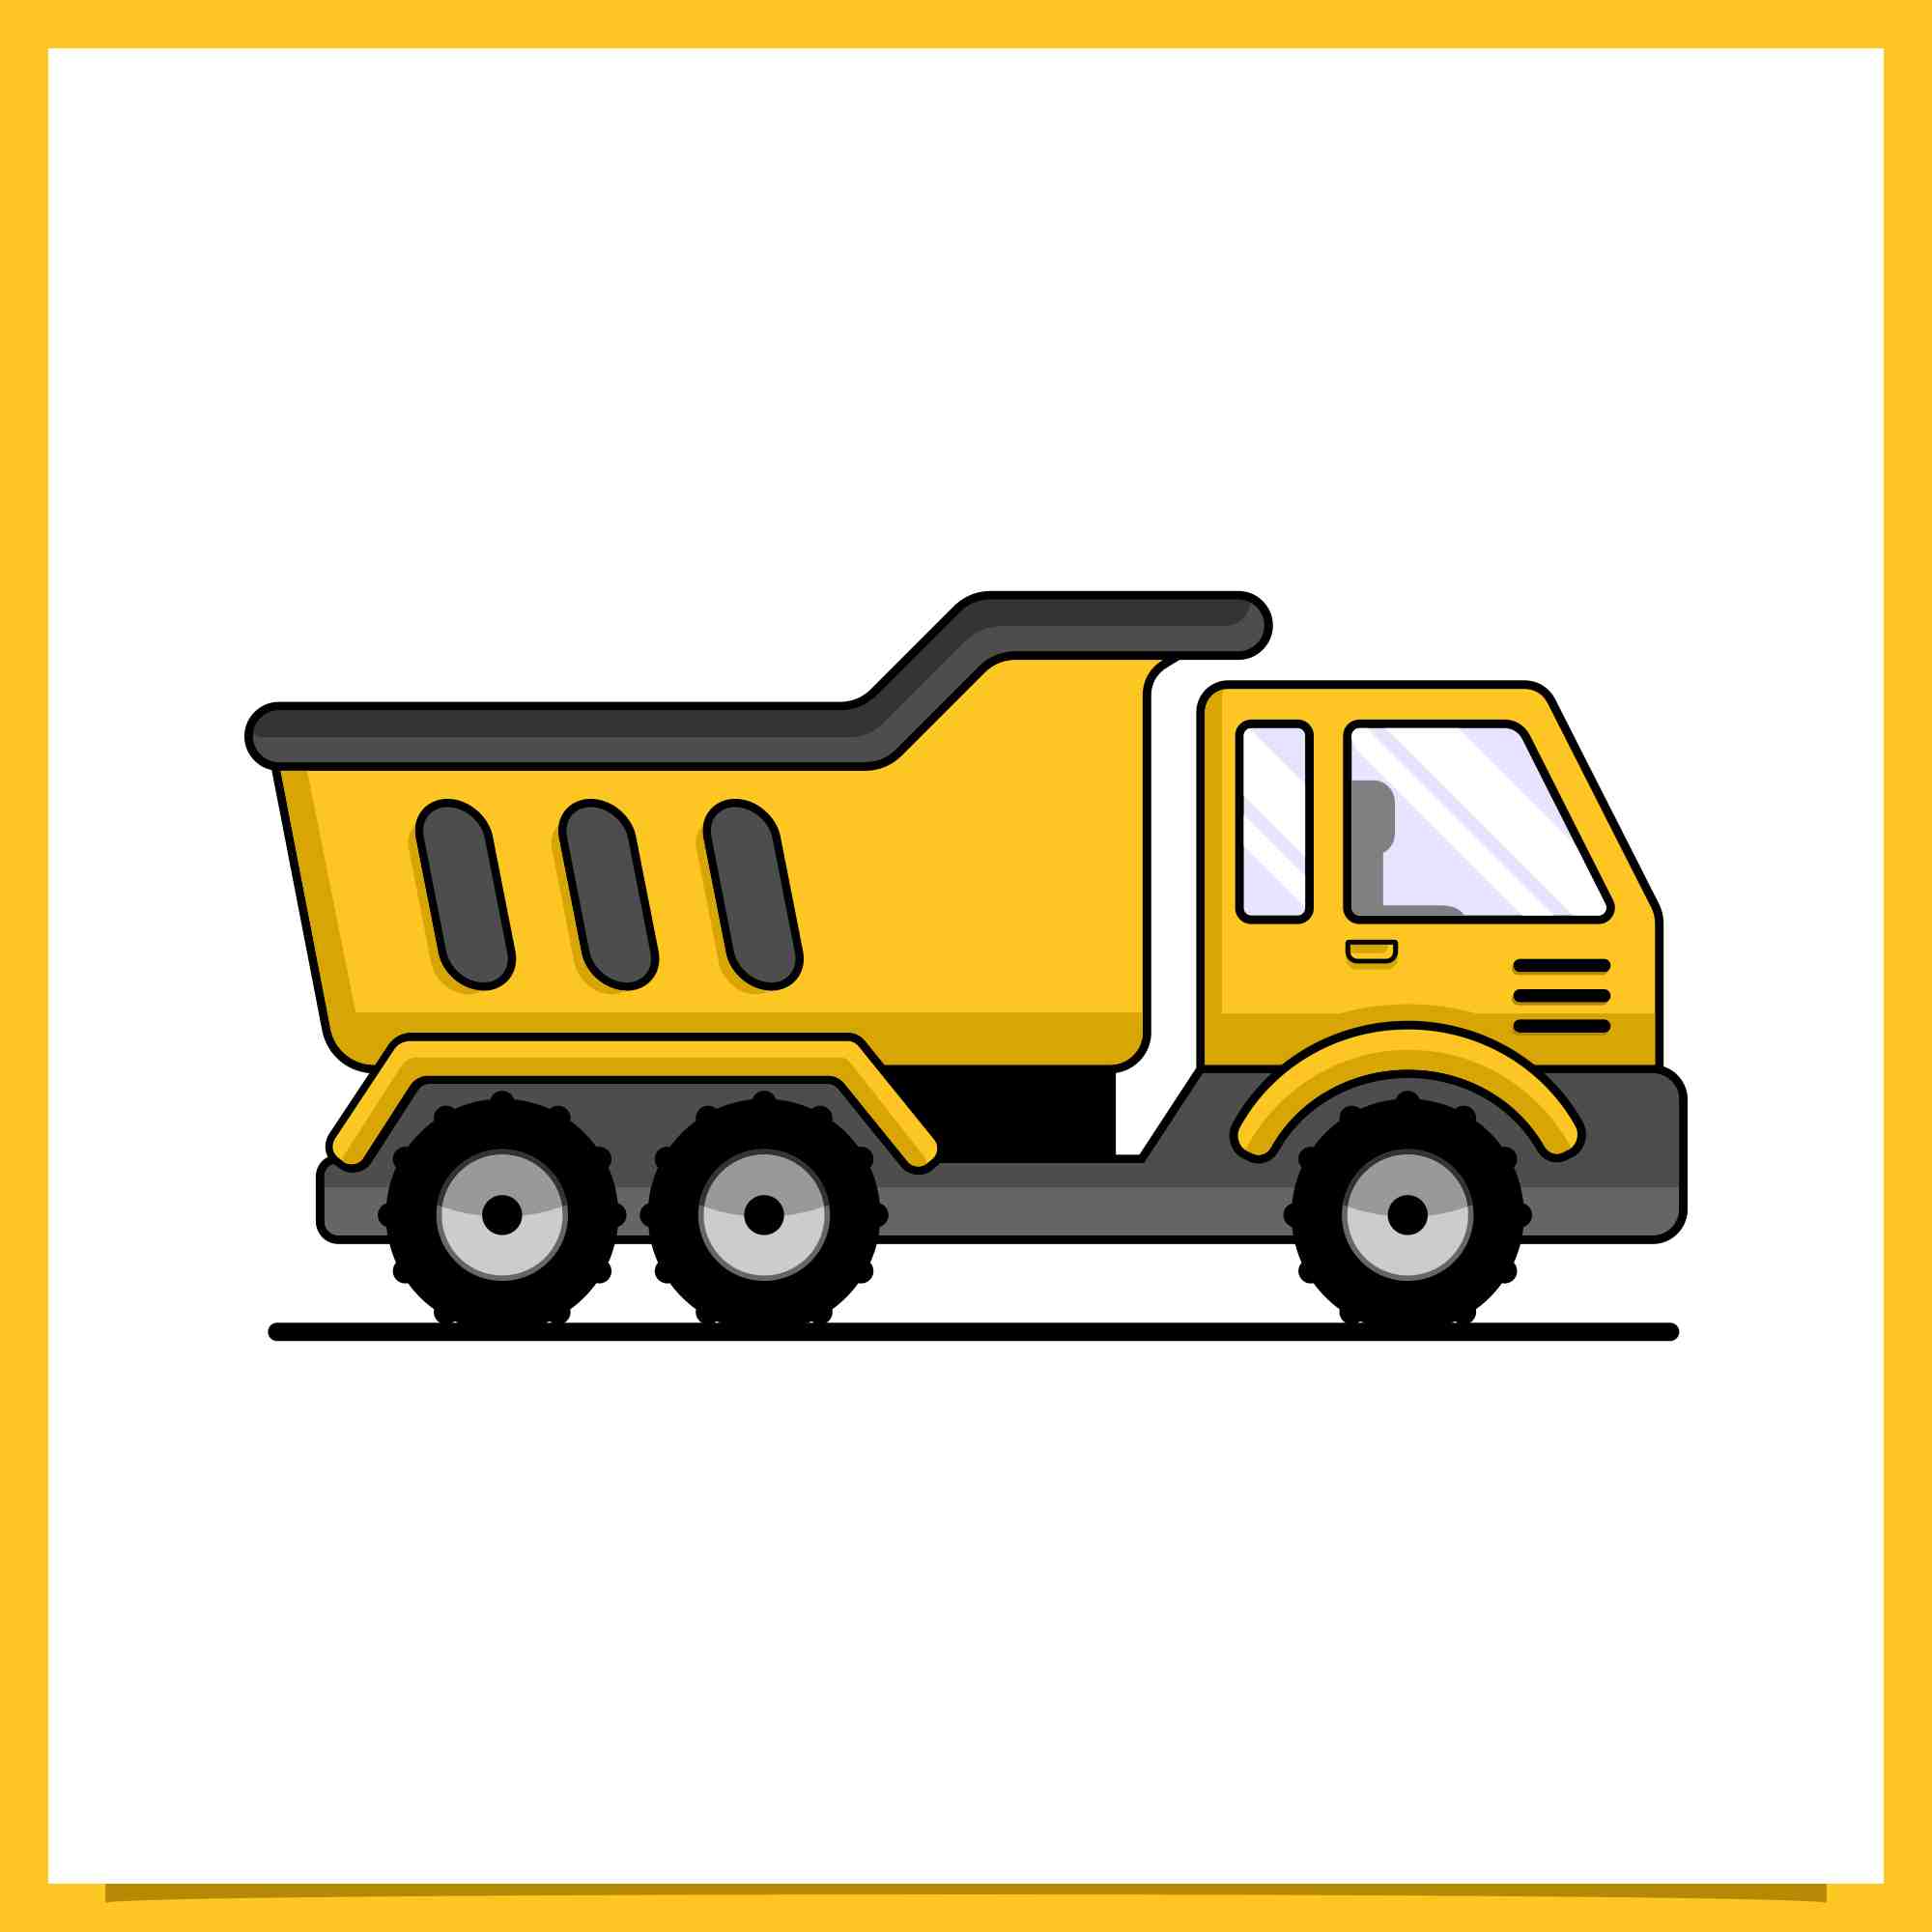 contructions trucks machine design illustration 3 277